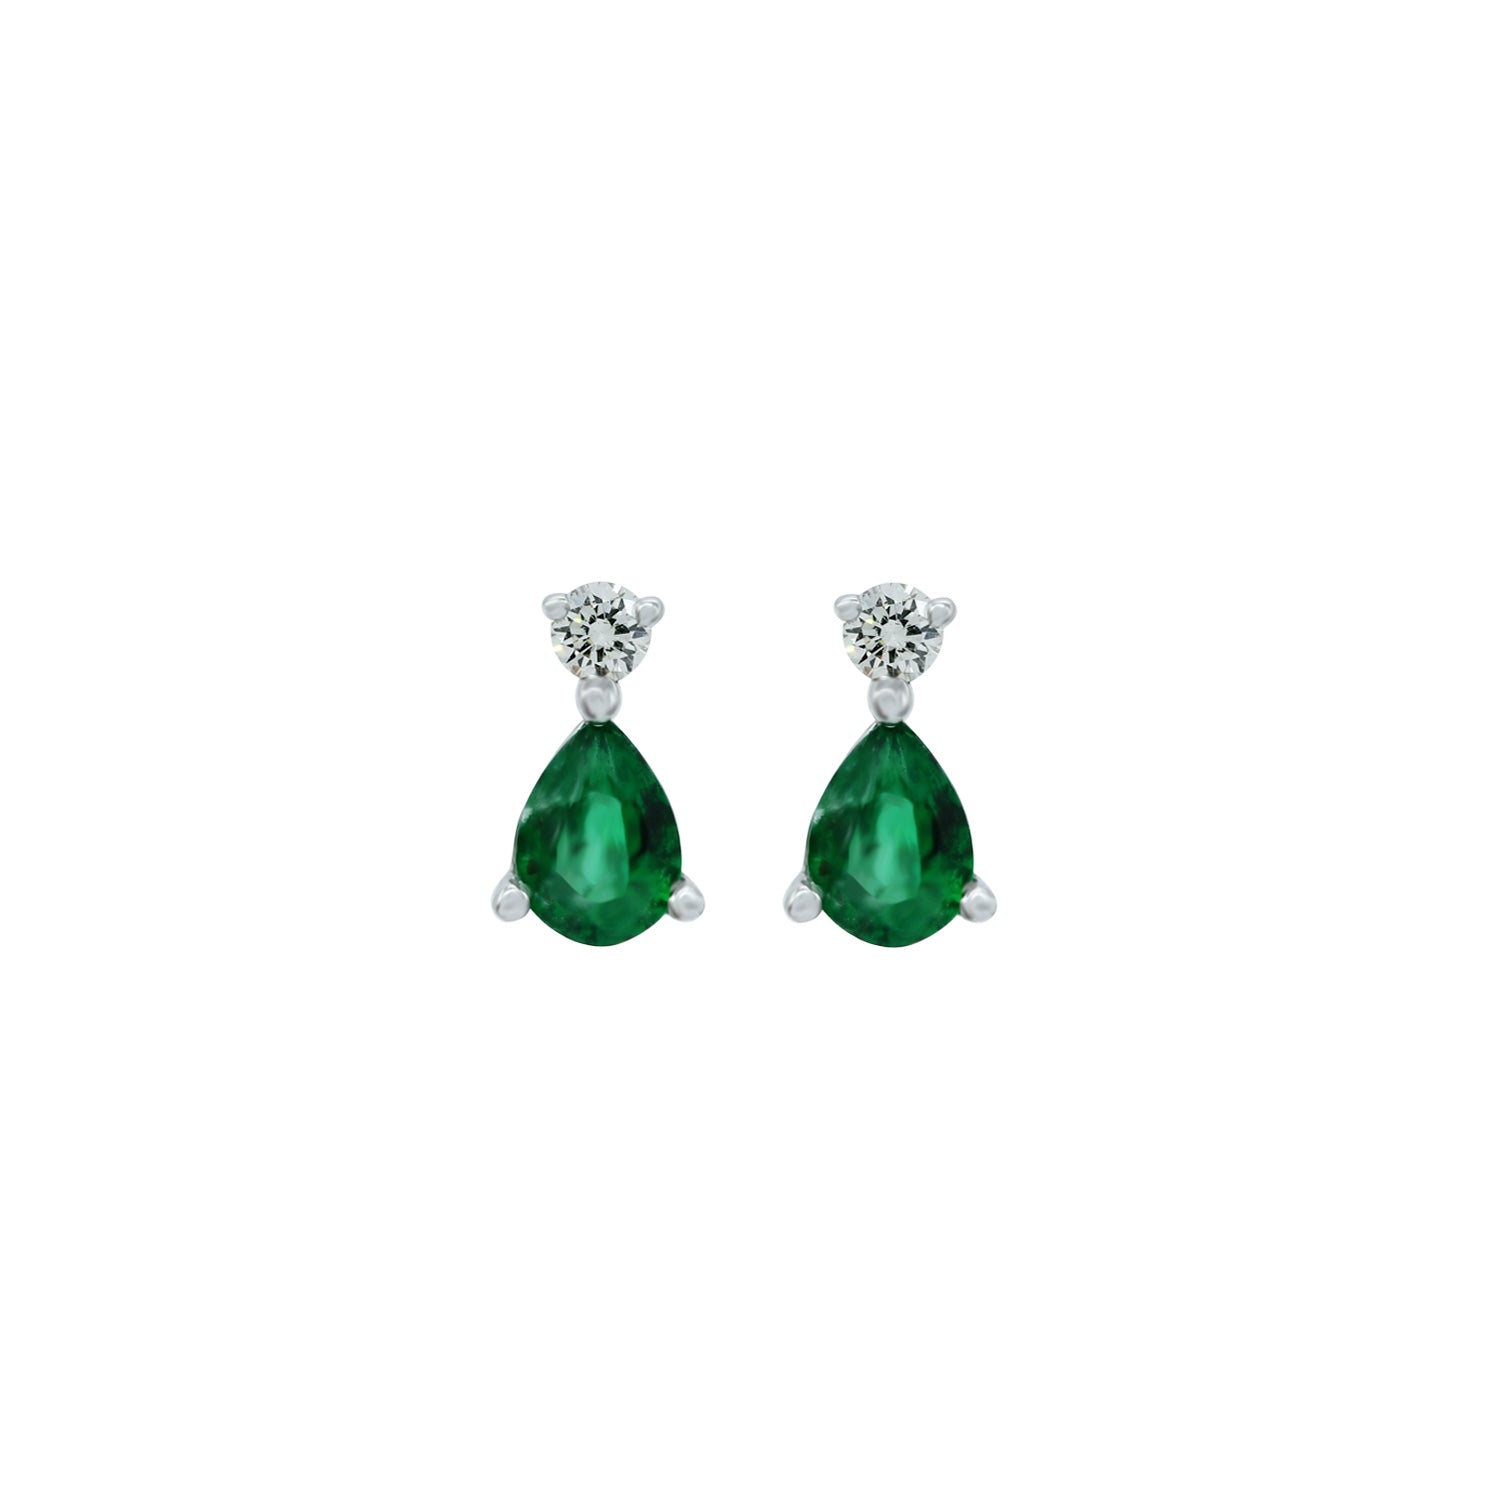 Diamond and Emerald Earring. Σκουλαρίκι με σμαράγδι και μπριγιάν.